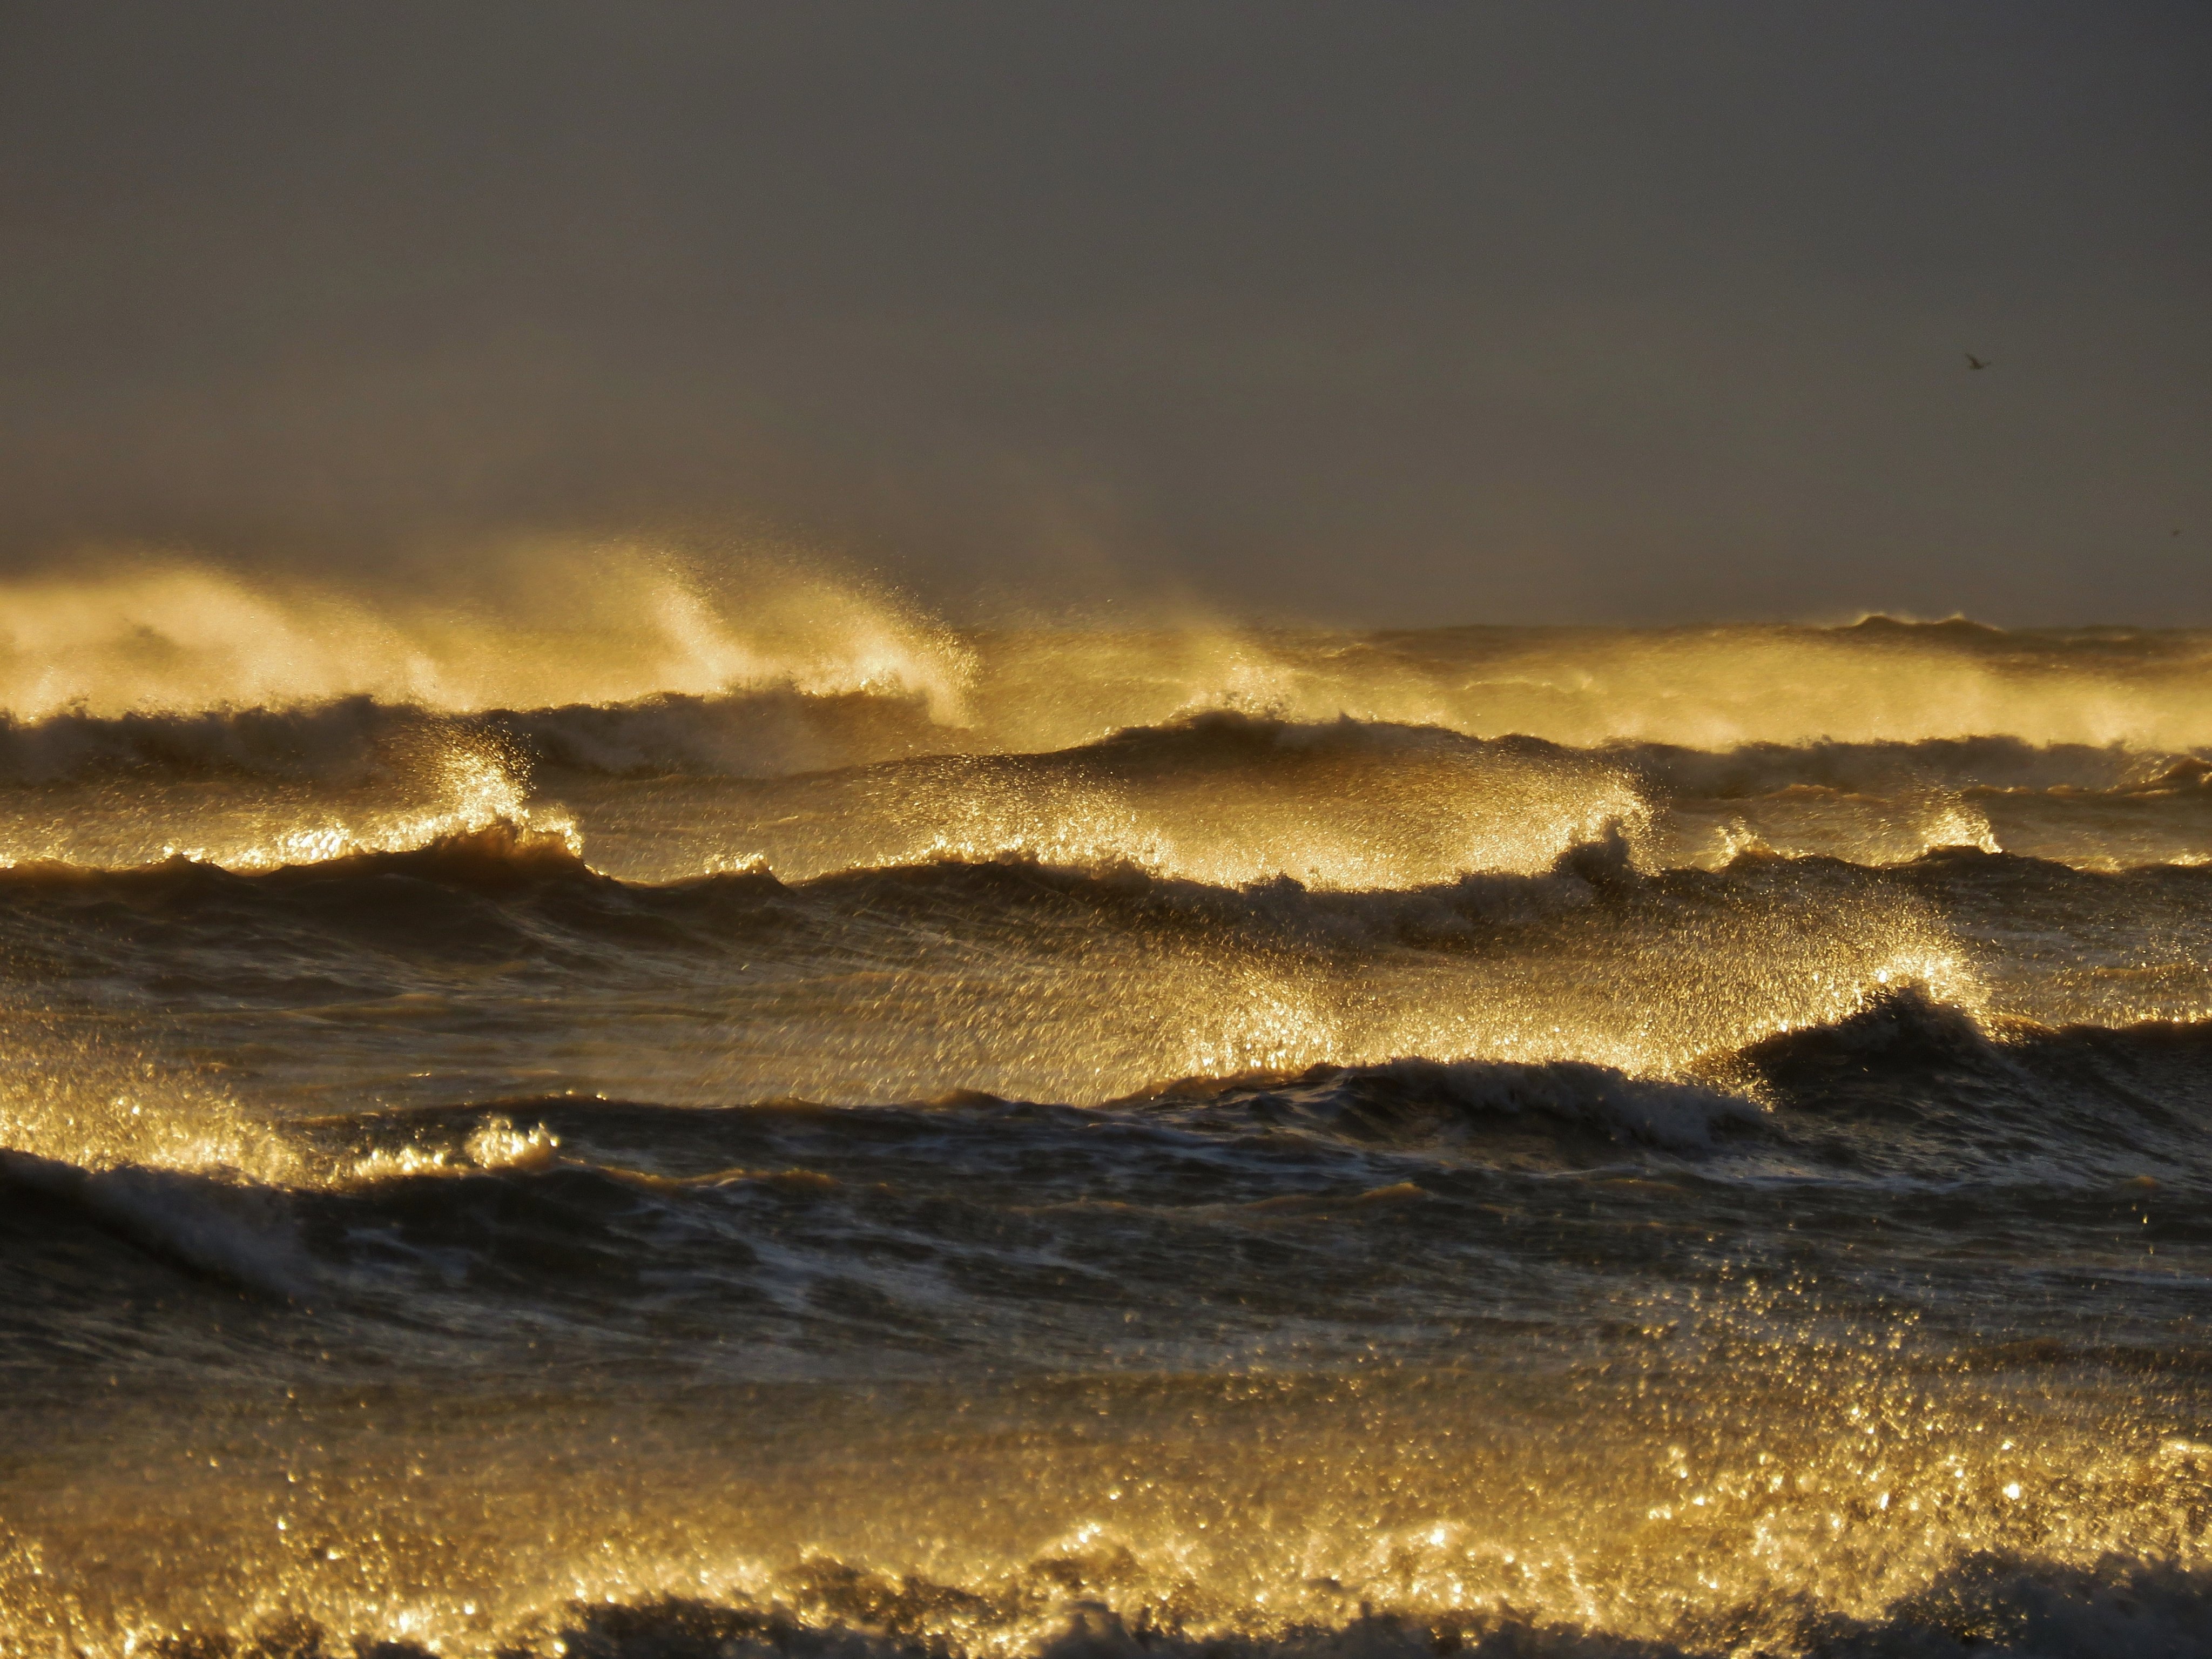 1st Place Liquid gold waves and spray as the sun illuminate a windy Greatstone beach by Ian Hook @ianhook66